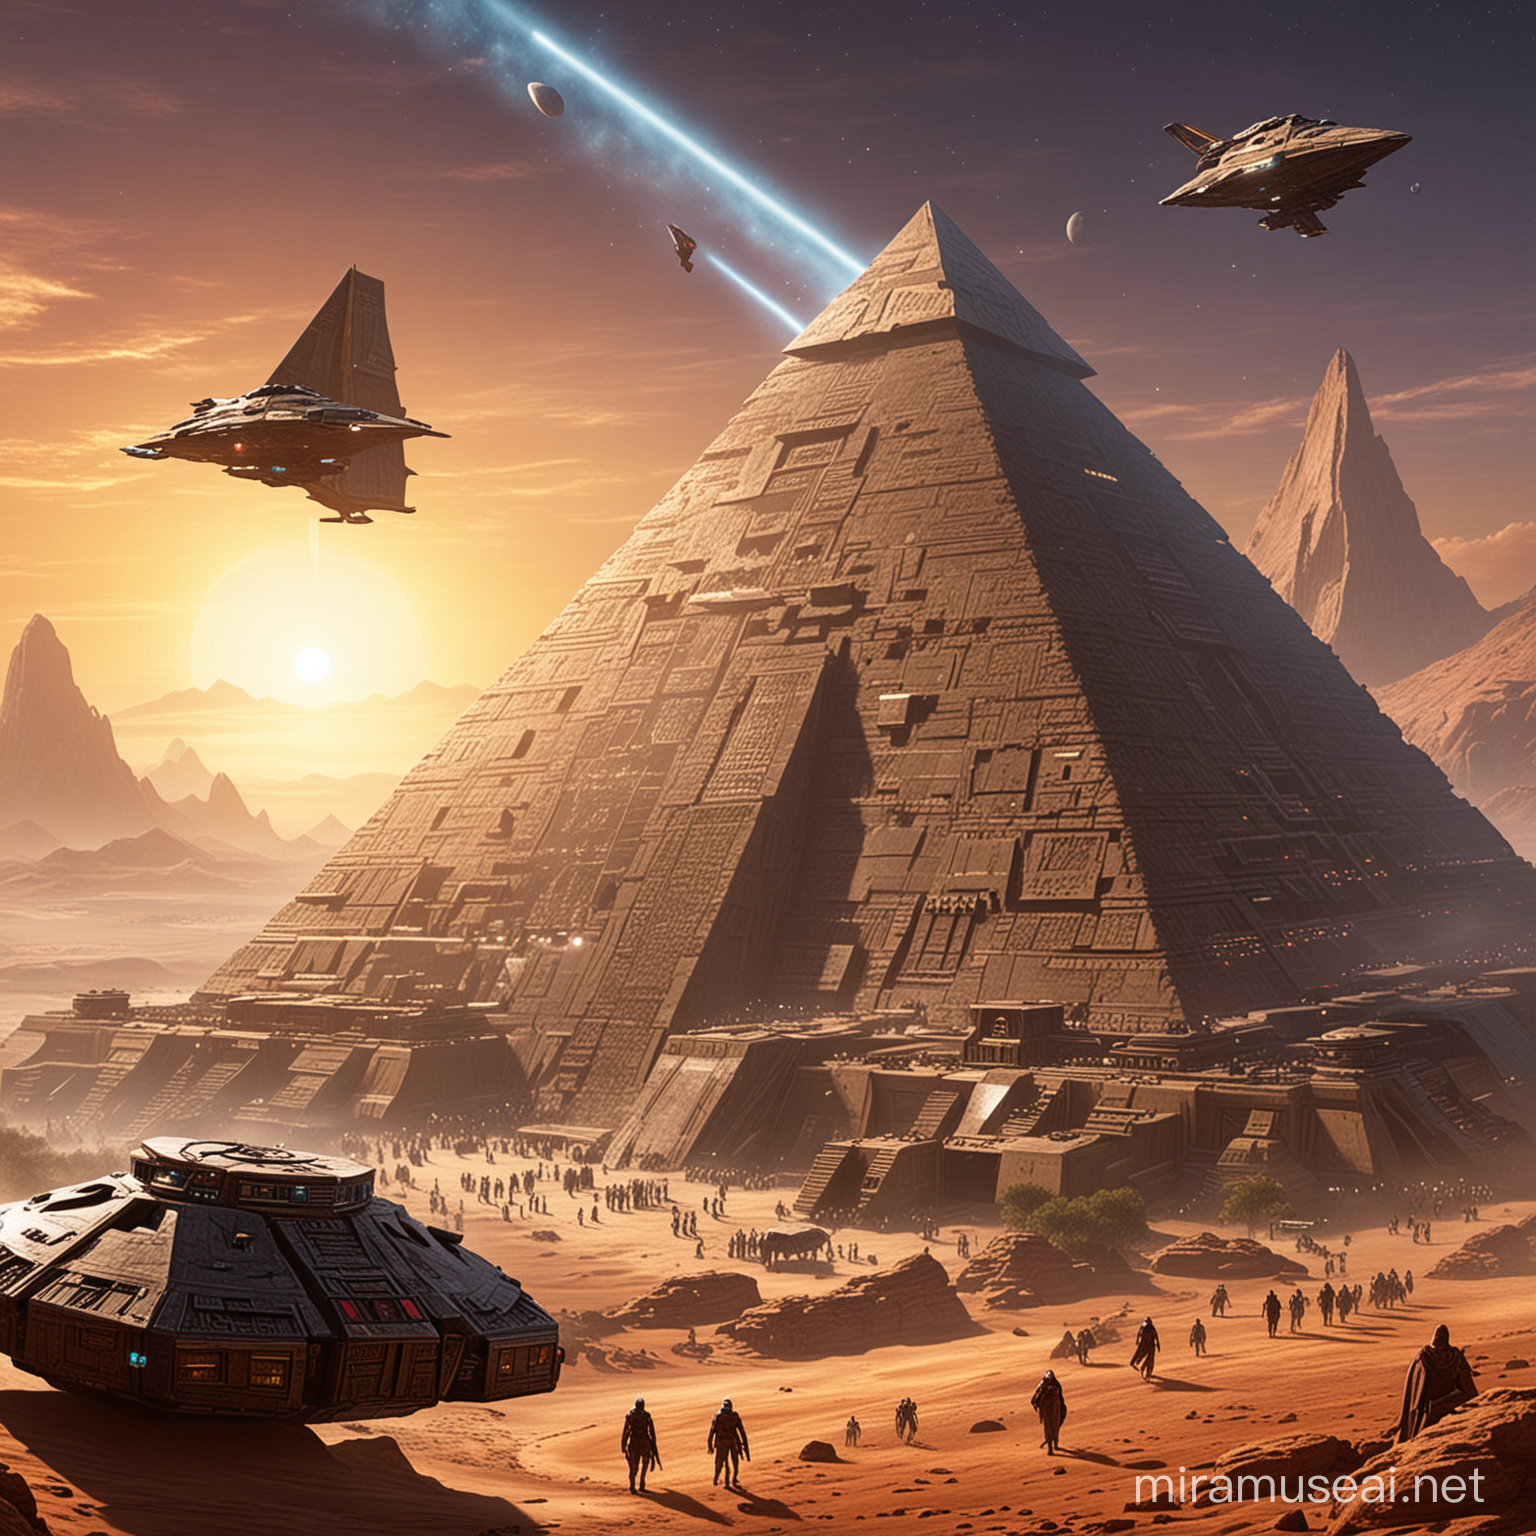 Interstellar Adventure Darth Sidiouss Shuttle and Aztec Pyramid on a Mysterious Planet